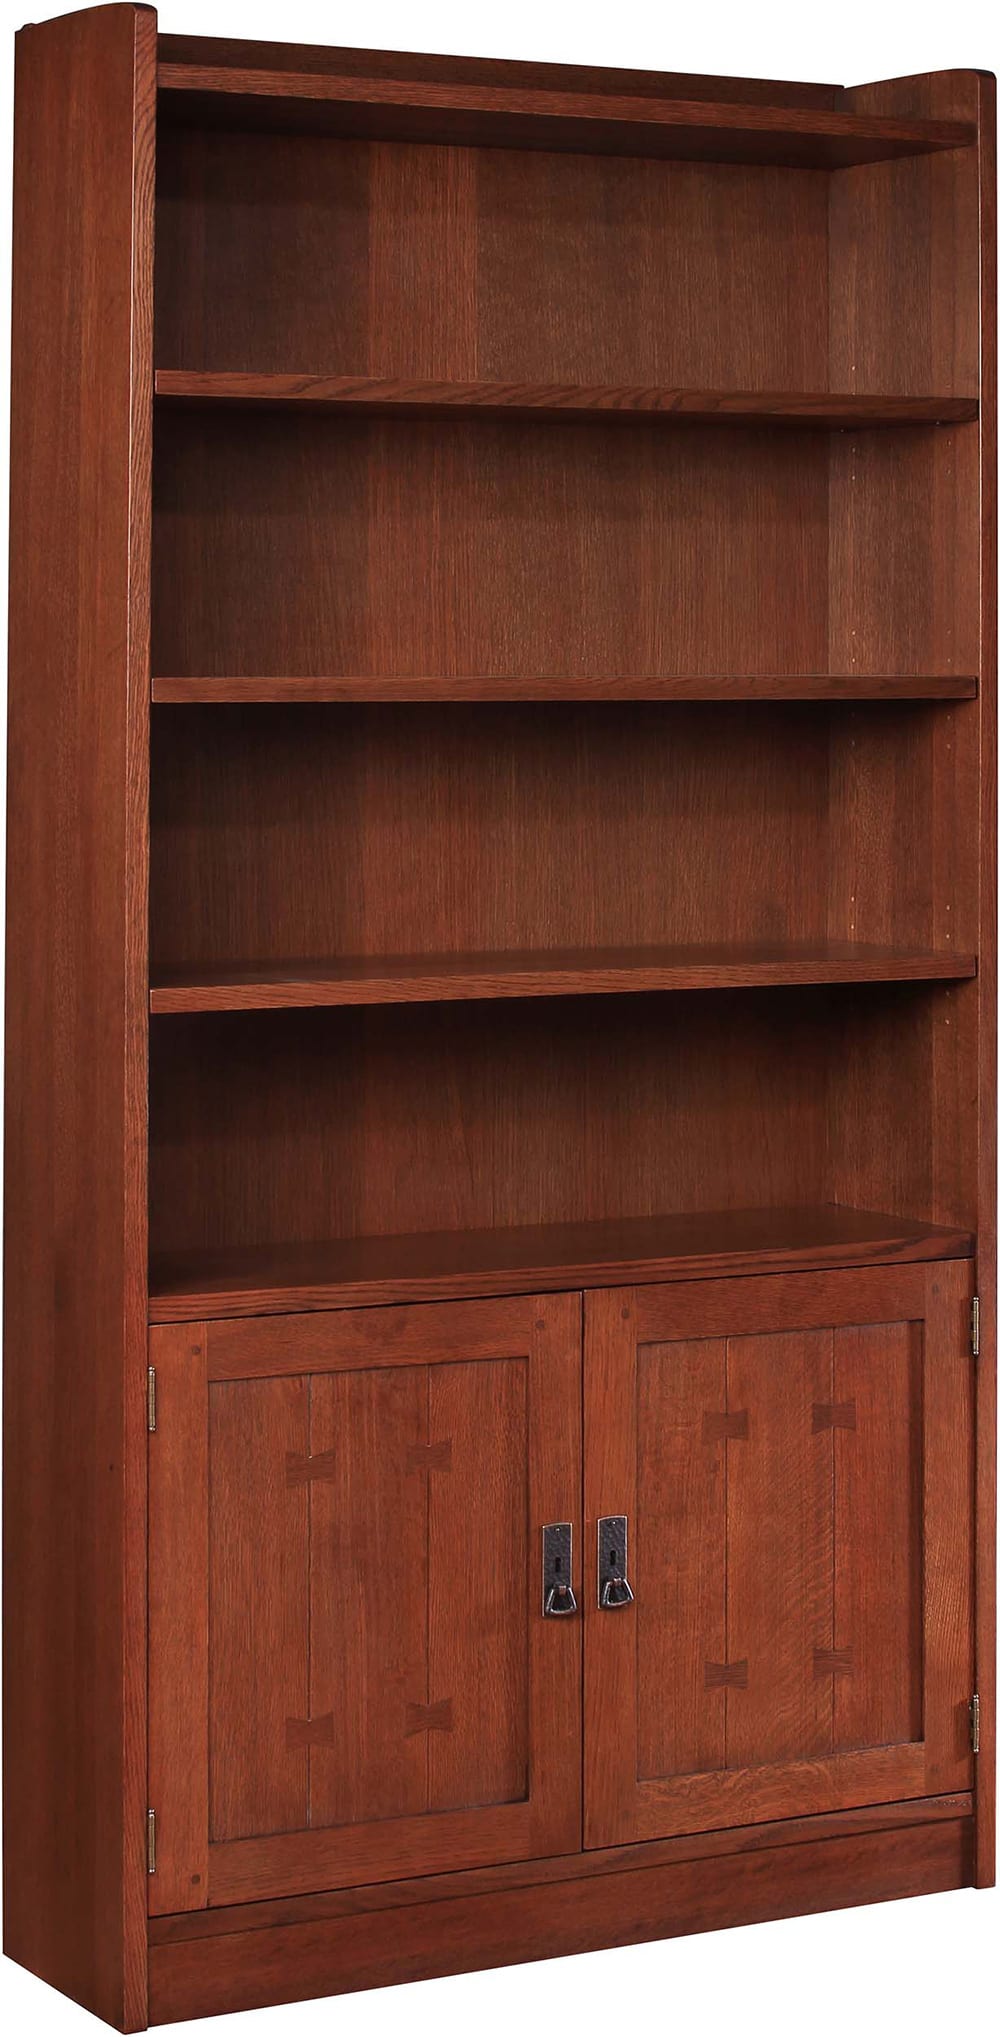 Tall Bookcase - Stickley Brand